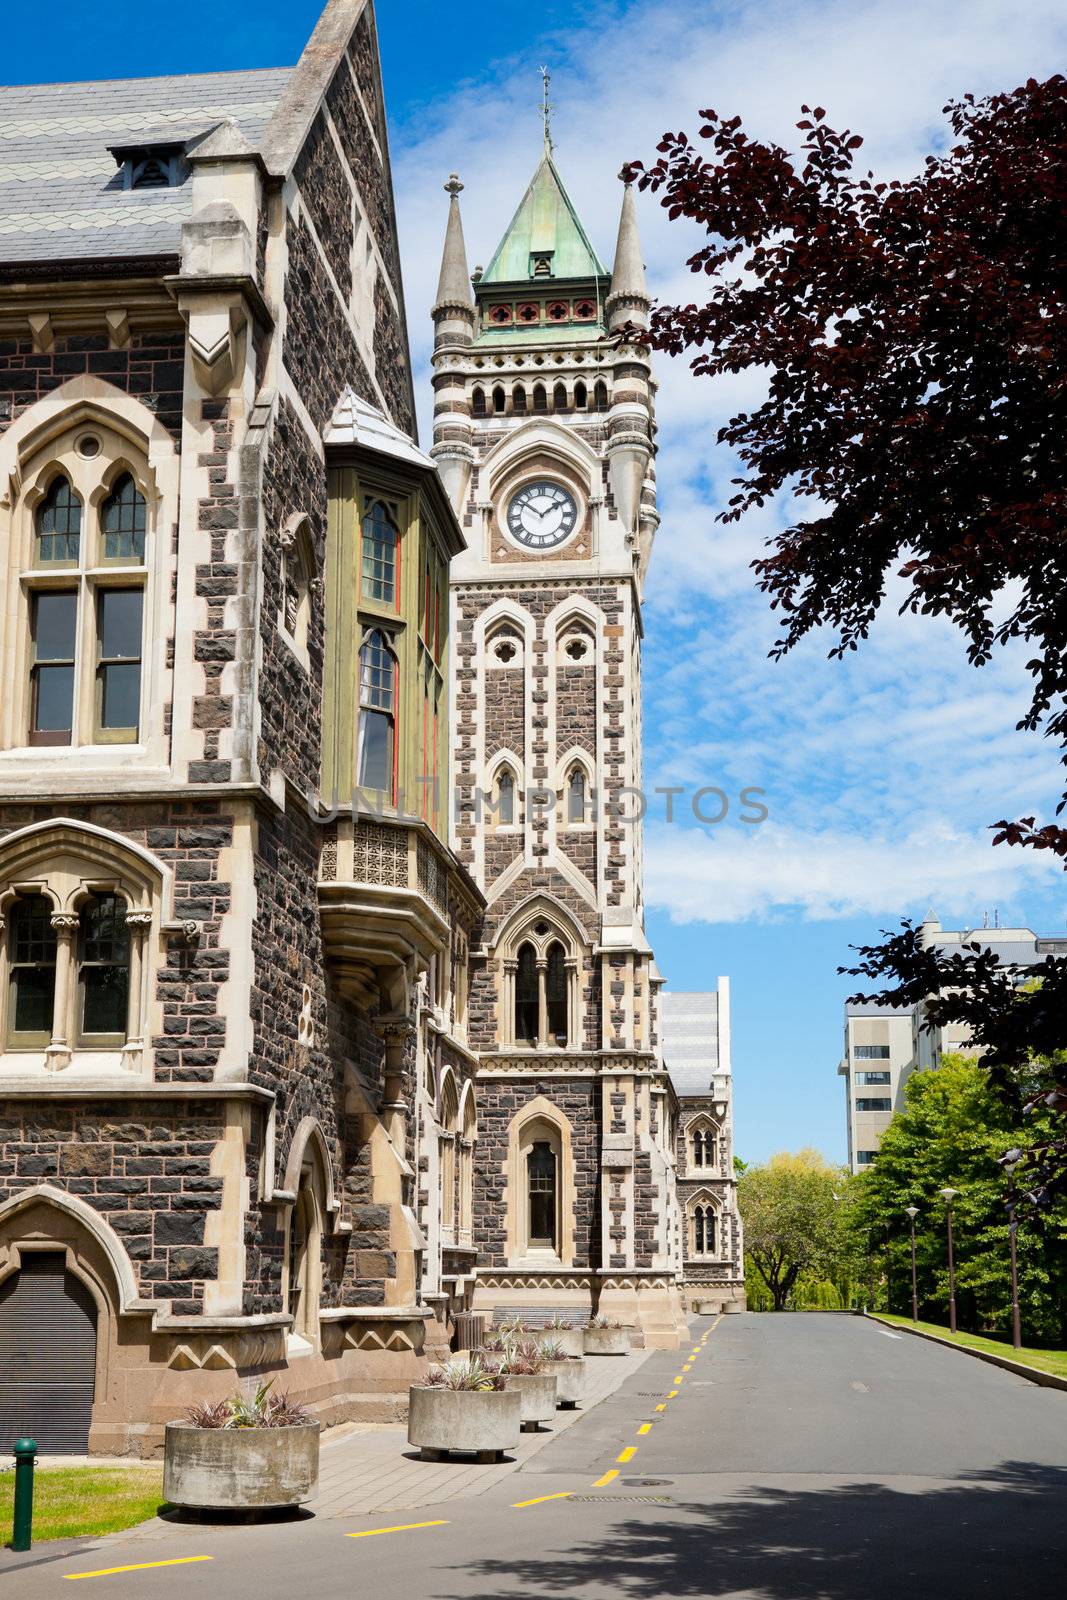 University of Otago Registry Building with clocktower, Dunedin, New Zealand